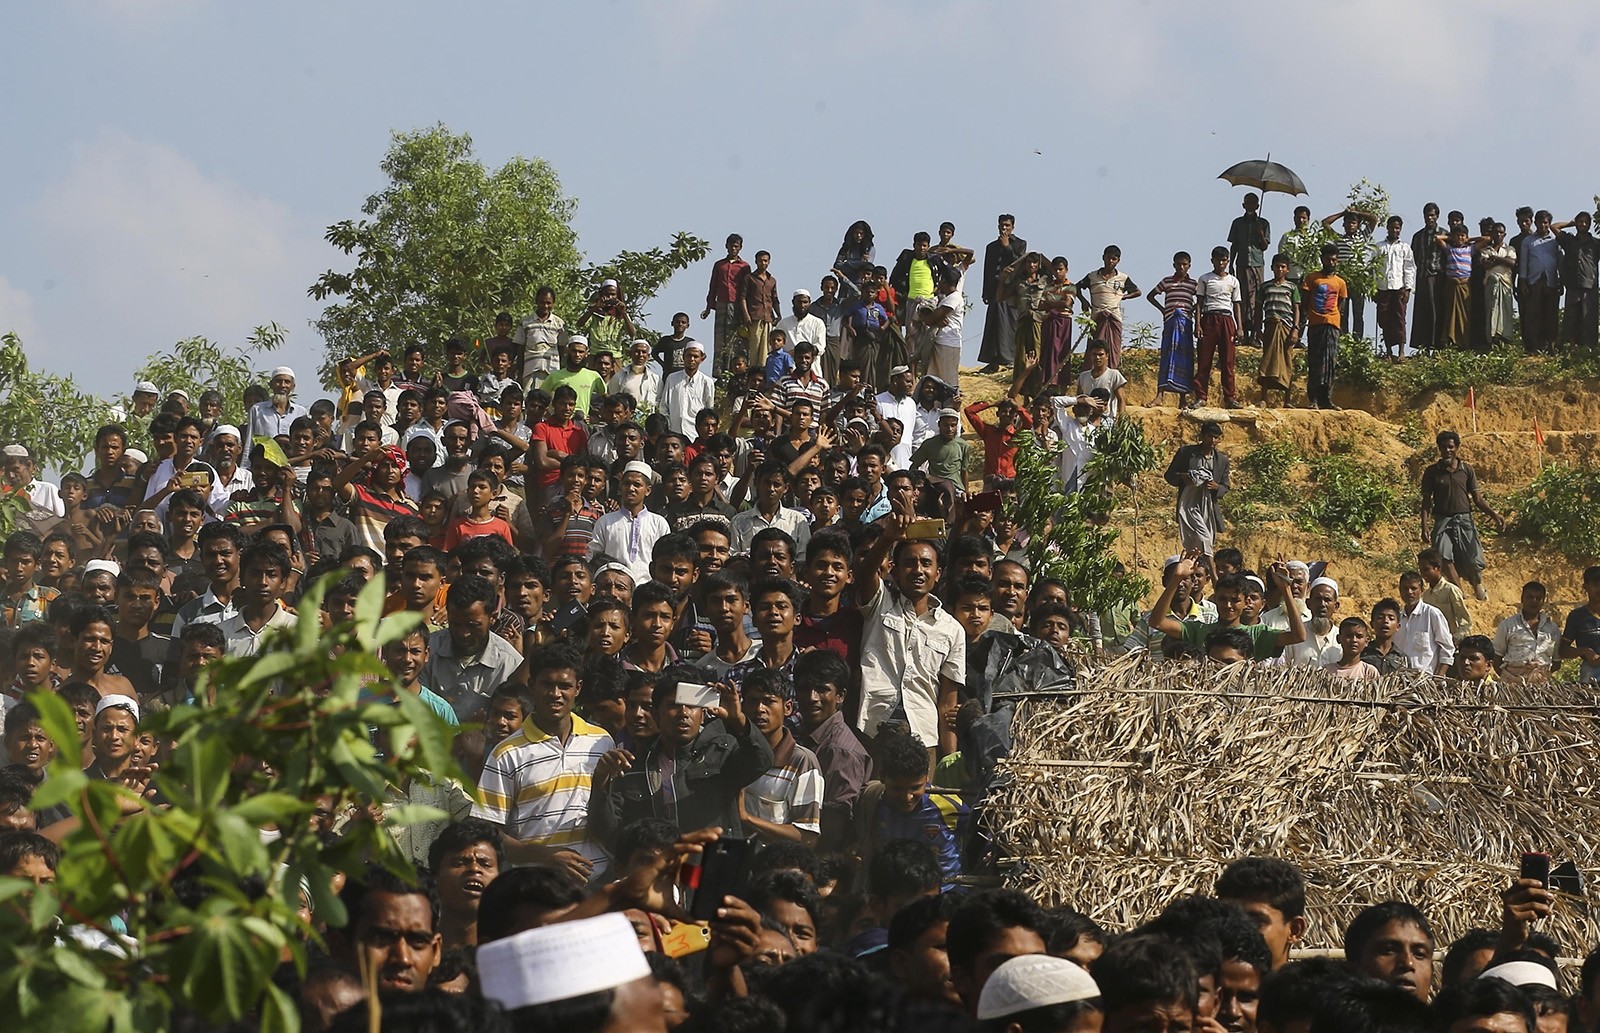 PM Yıldırım urges global community to take action for Rohingya crisis